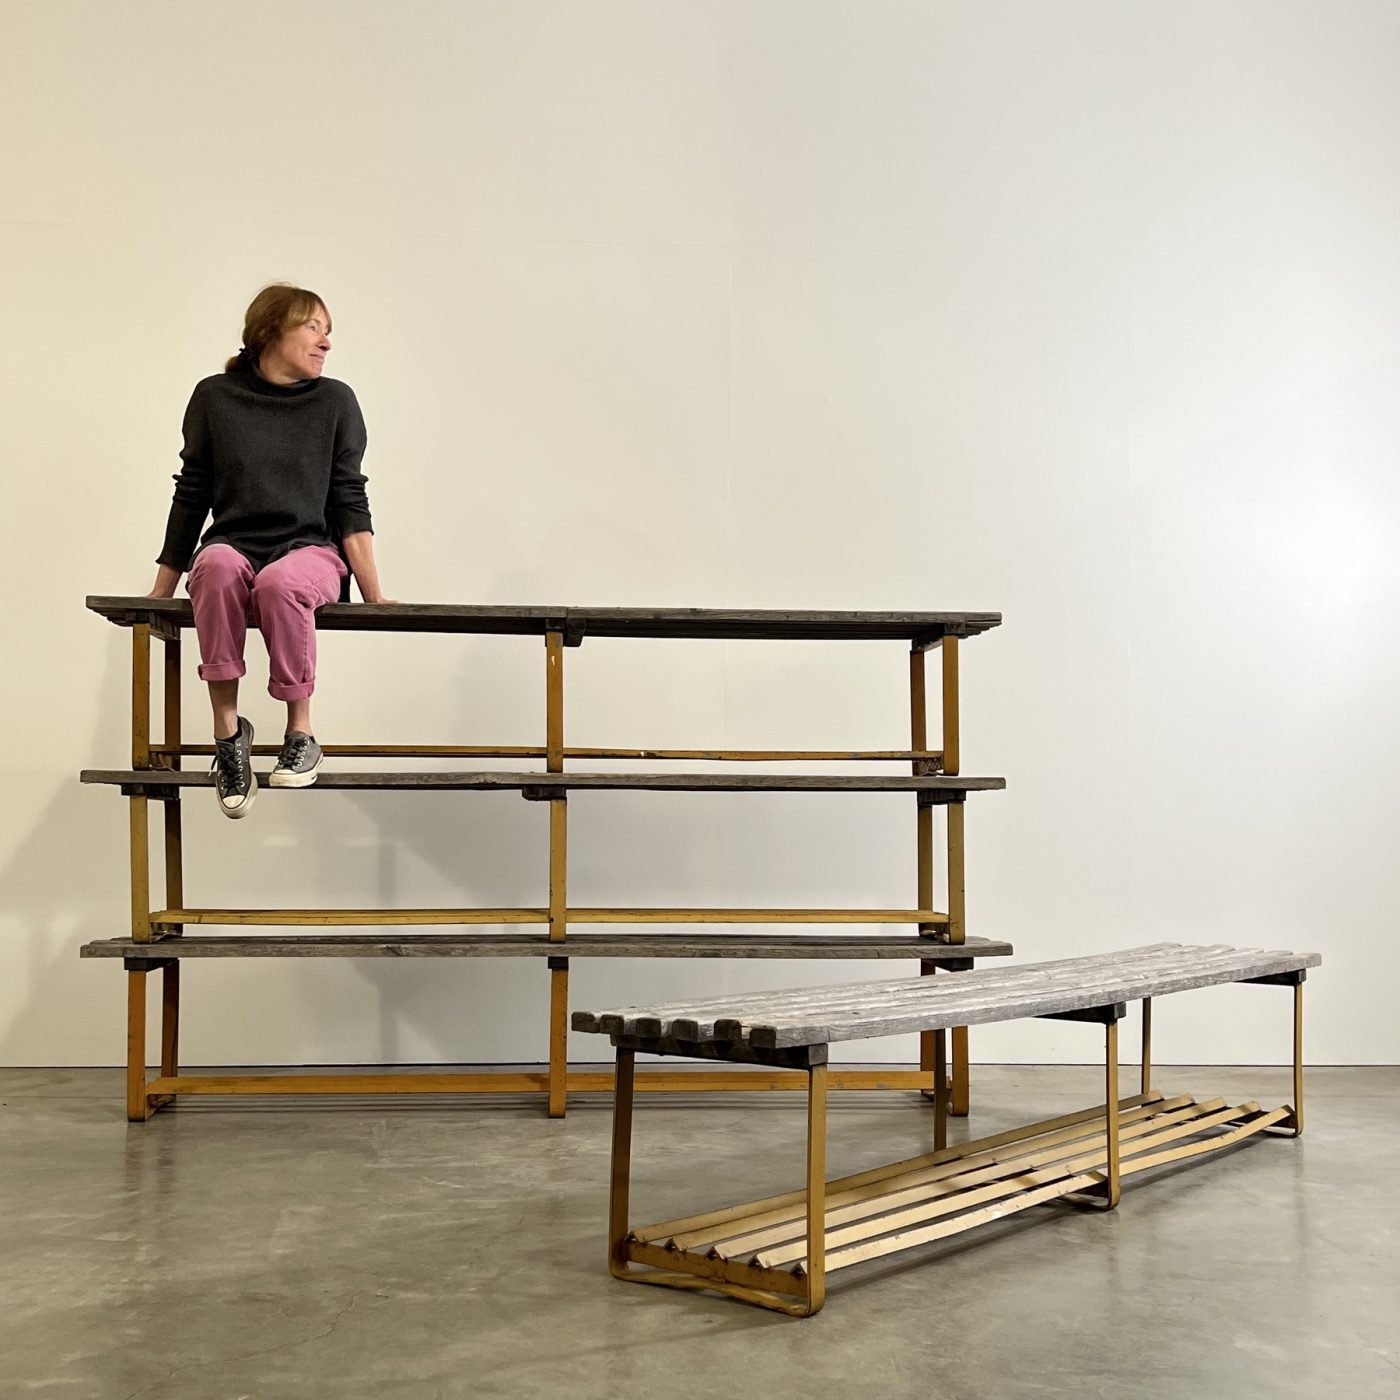 objet-vagabond-gymnastic-benches0005